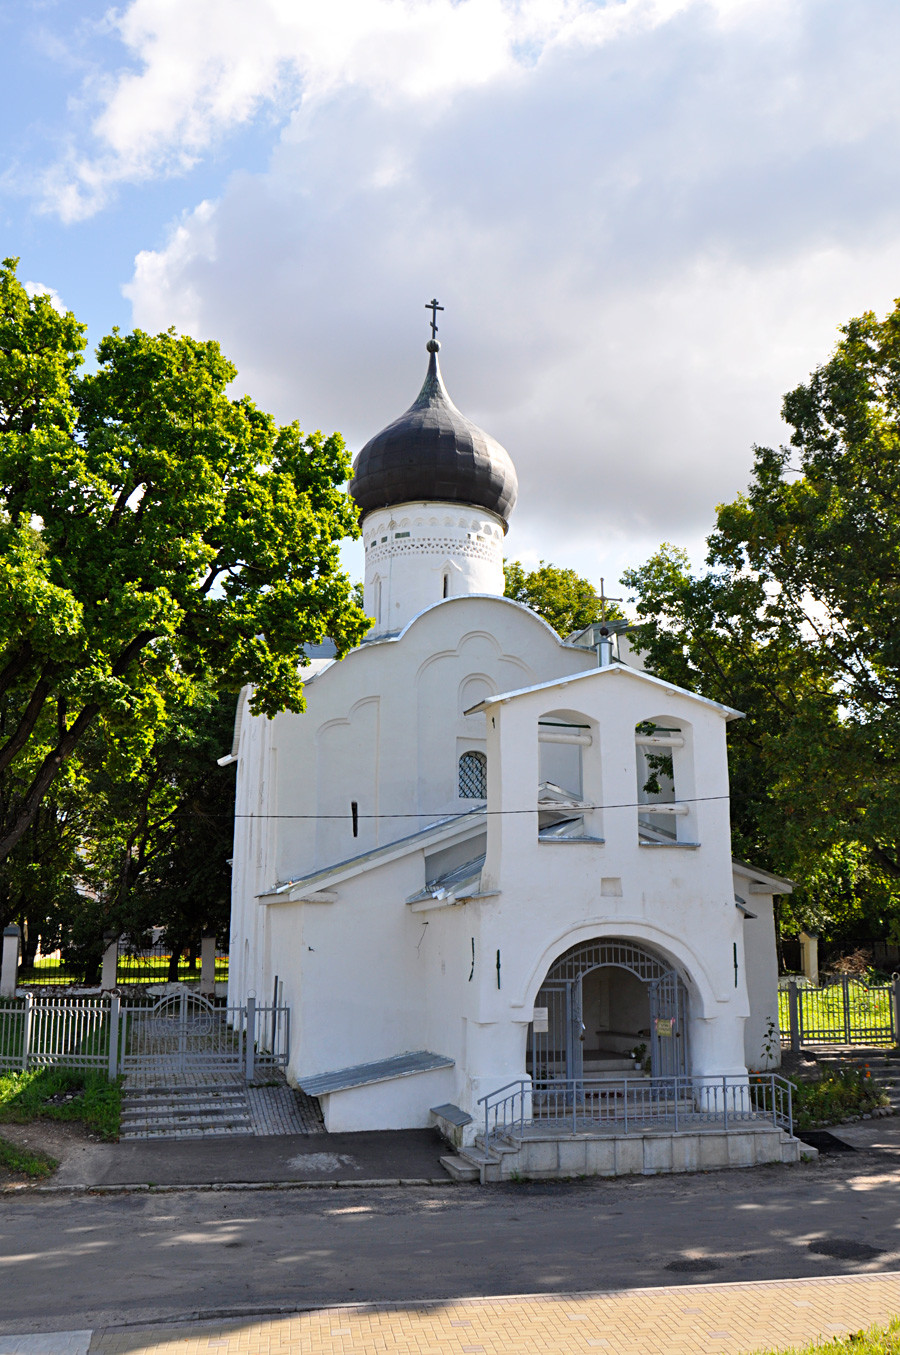 The Church Georgiya so Vzvoza (Church of St. George by the road leading up the bank), 1494